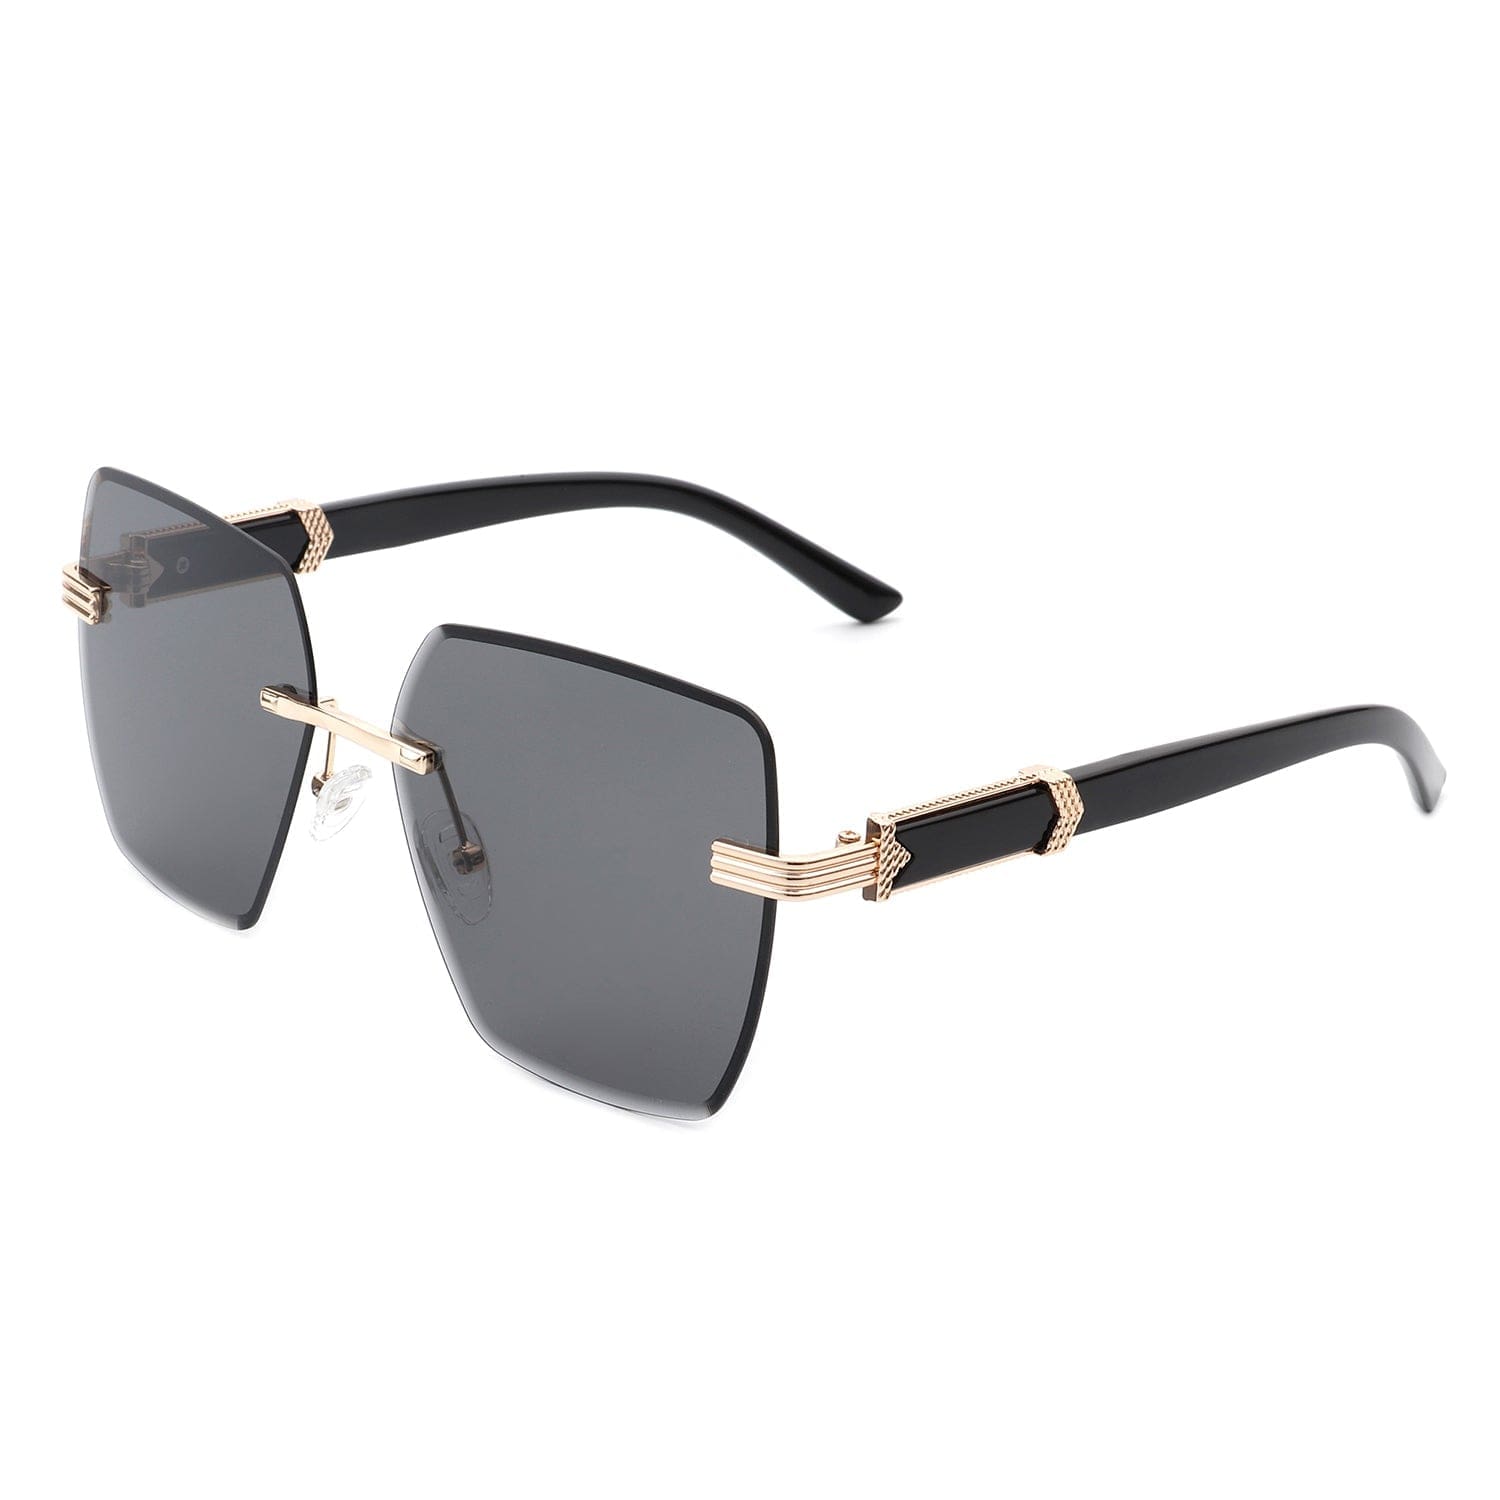 Glimmery - Oversized Rimless Square Sunglasses 6